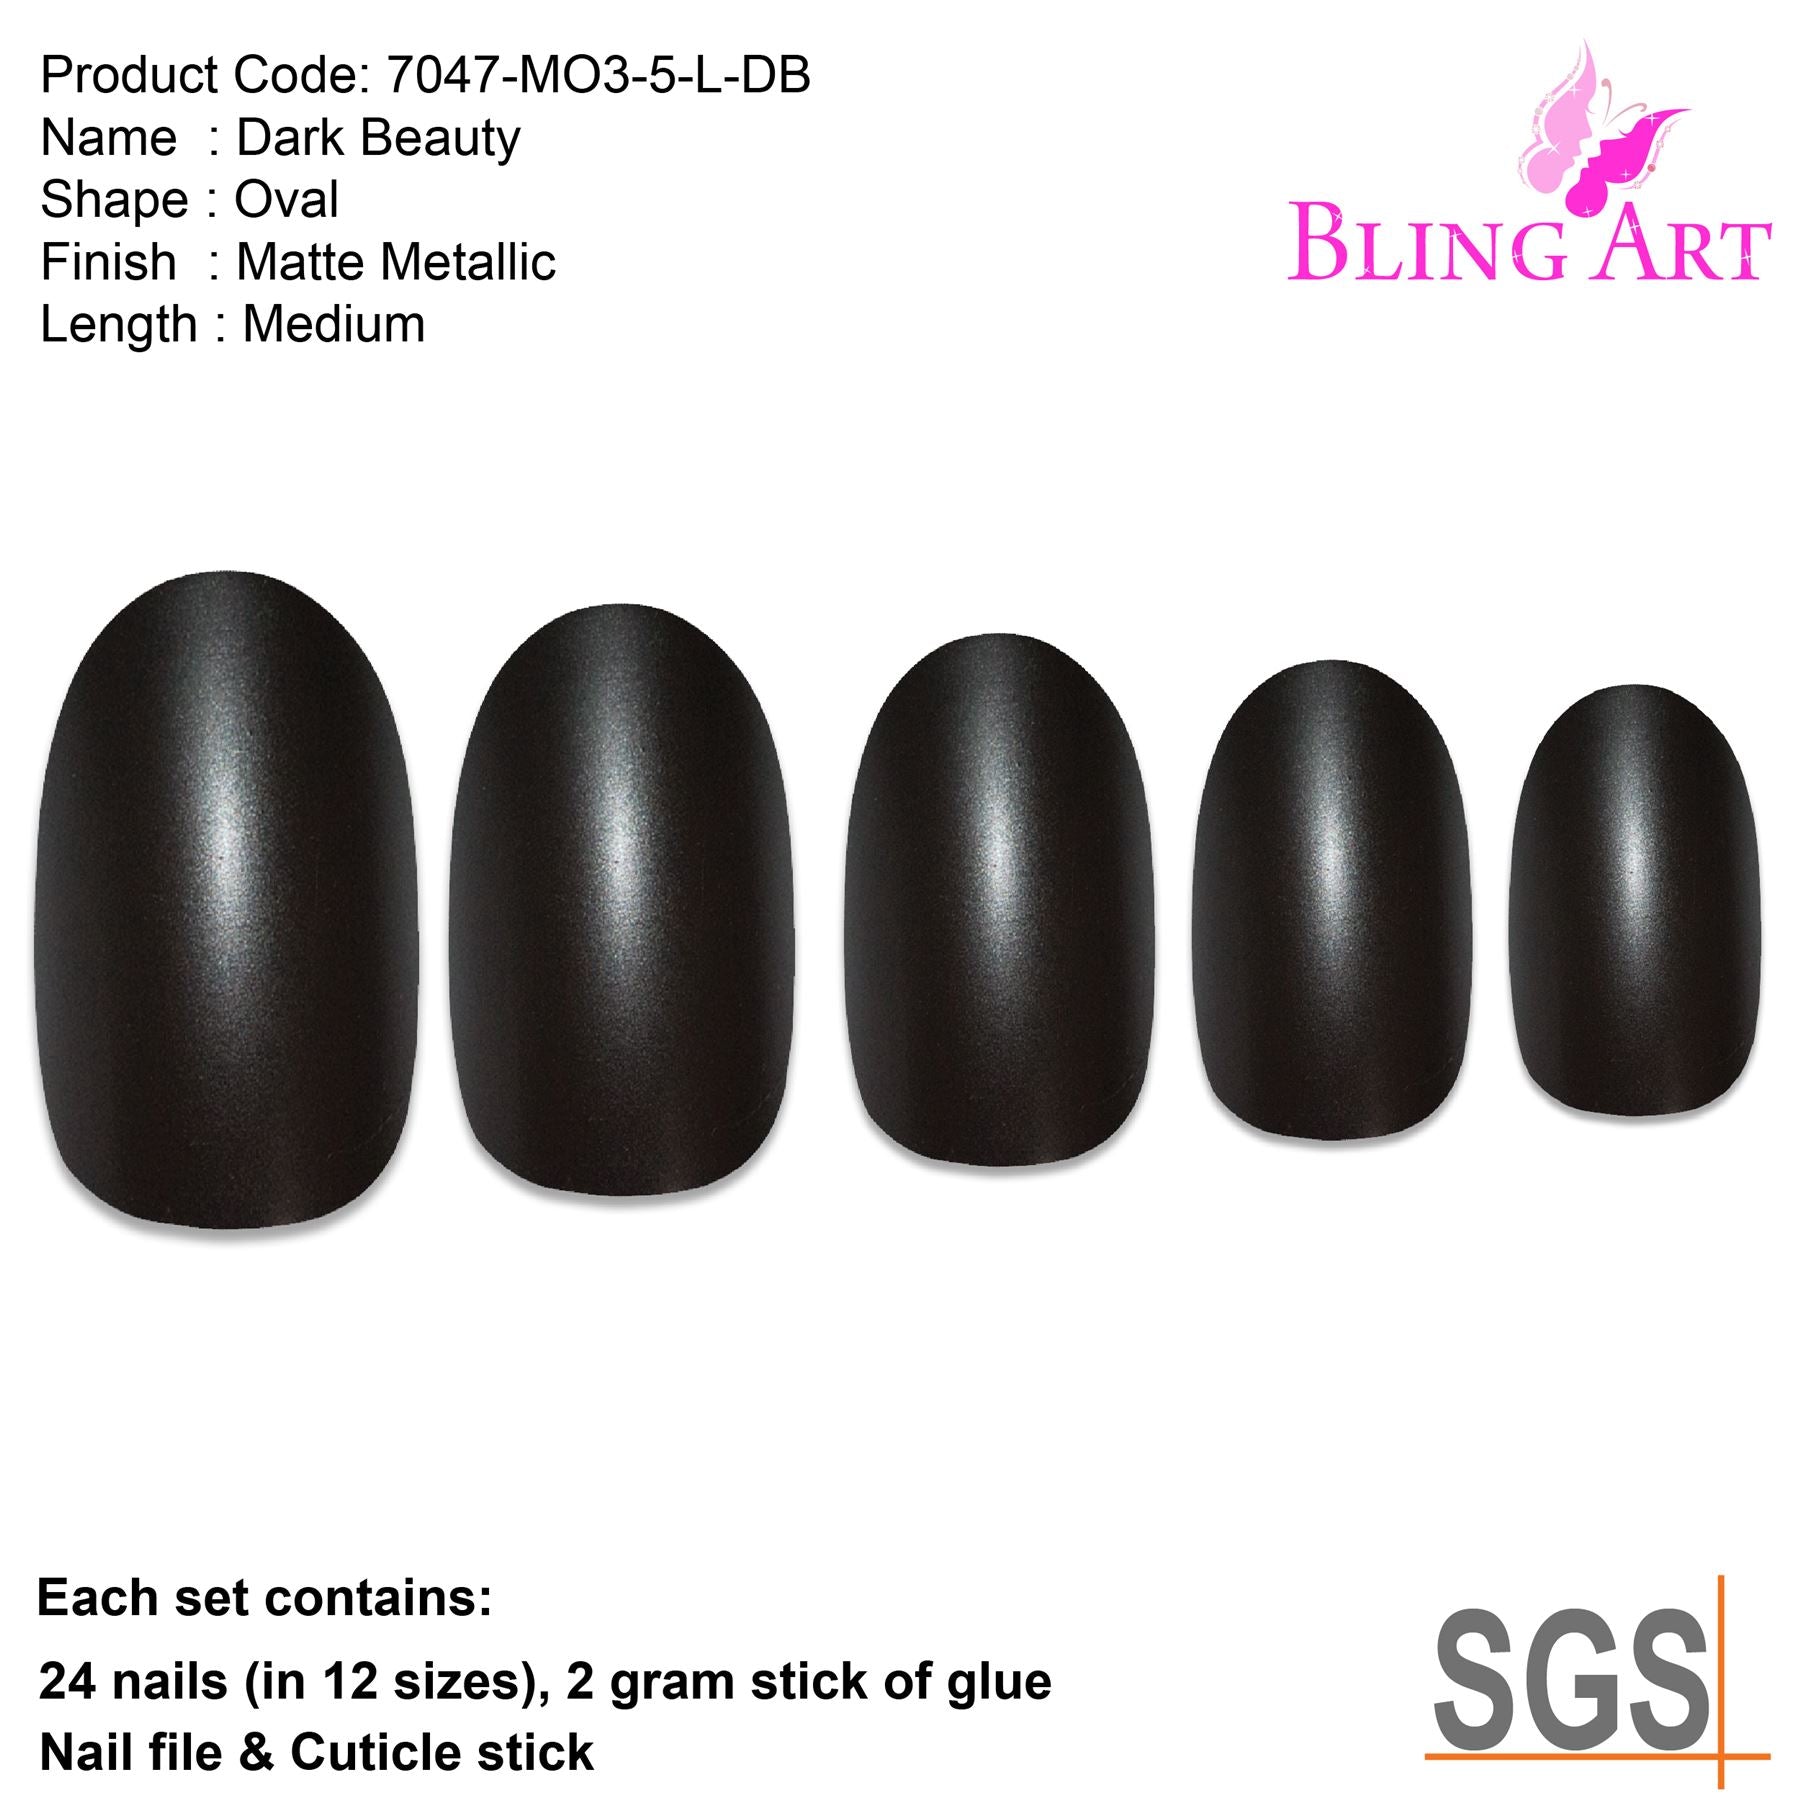 False Nails by Bling Art Black Matte Metallic Oval Medium Fake Acrylic Tips Glue